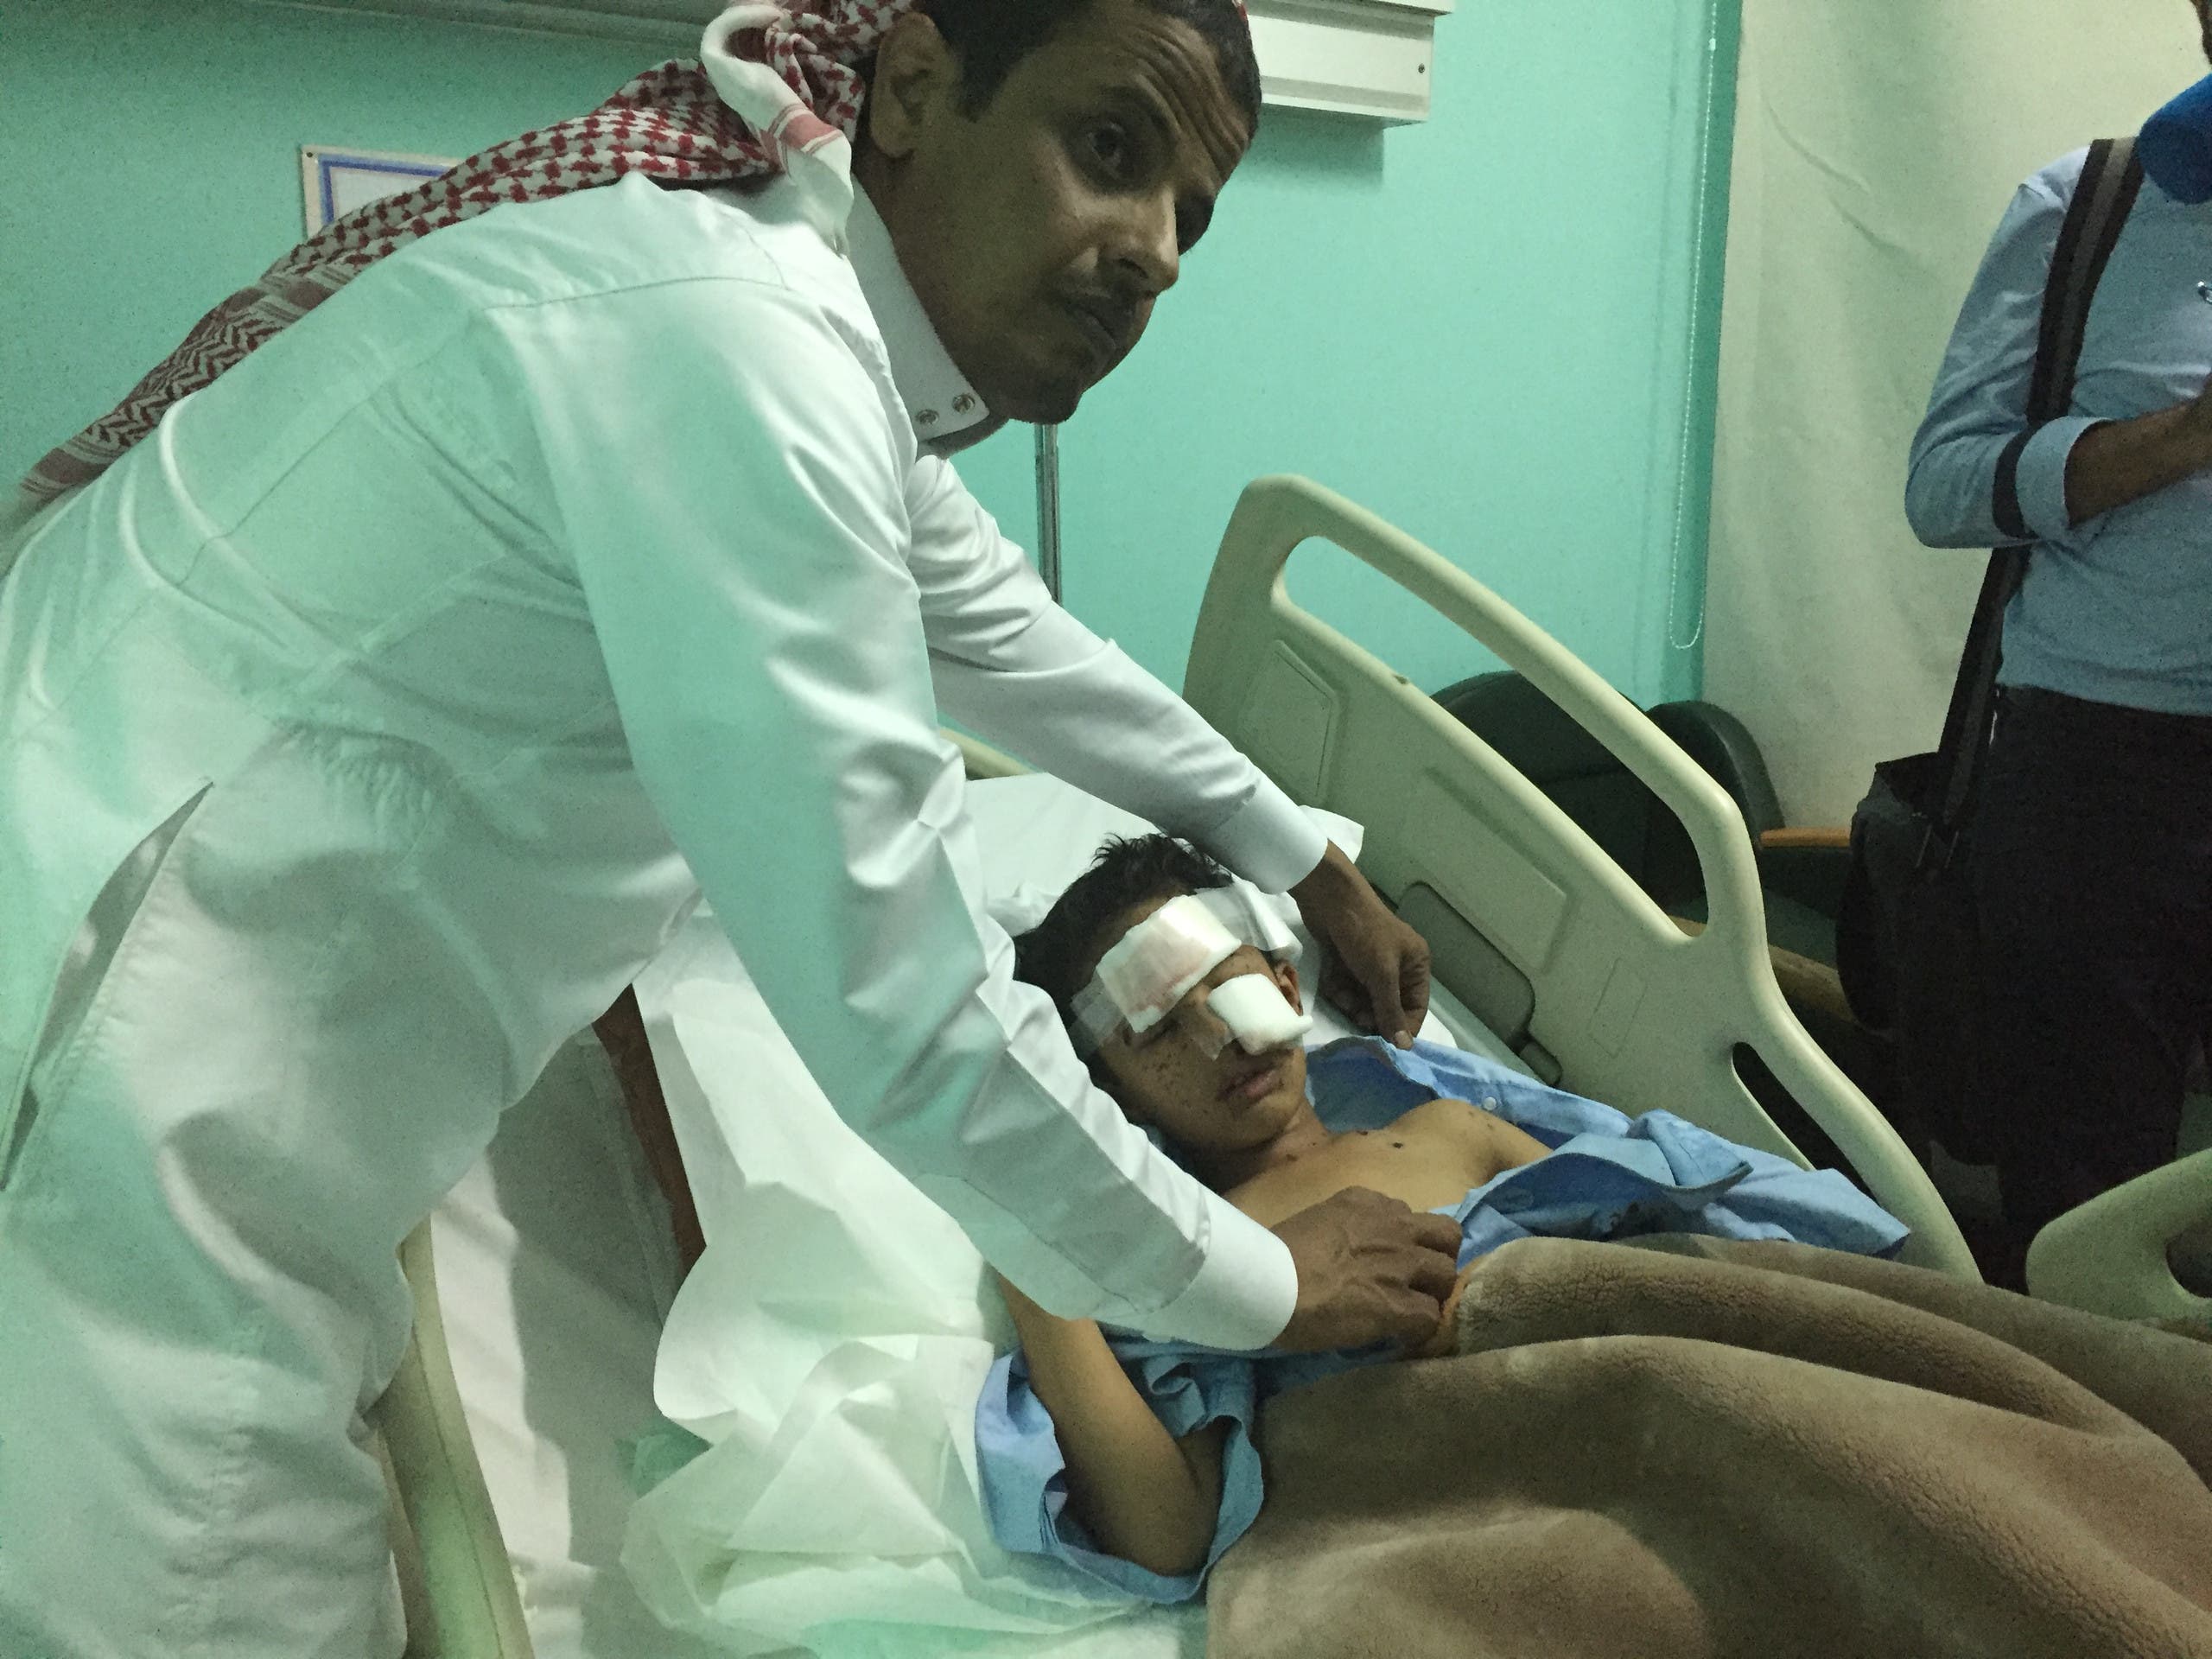 Mahdi Salah al-Abbas survived an attack on his house that killed his 3-year-old cousin Yahya. (Ismaeel Naar/Al Arabiya English)